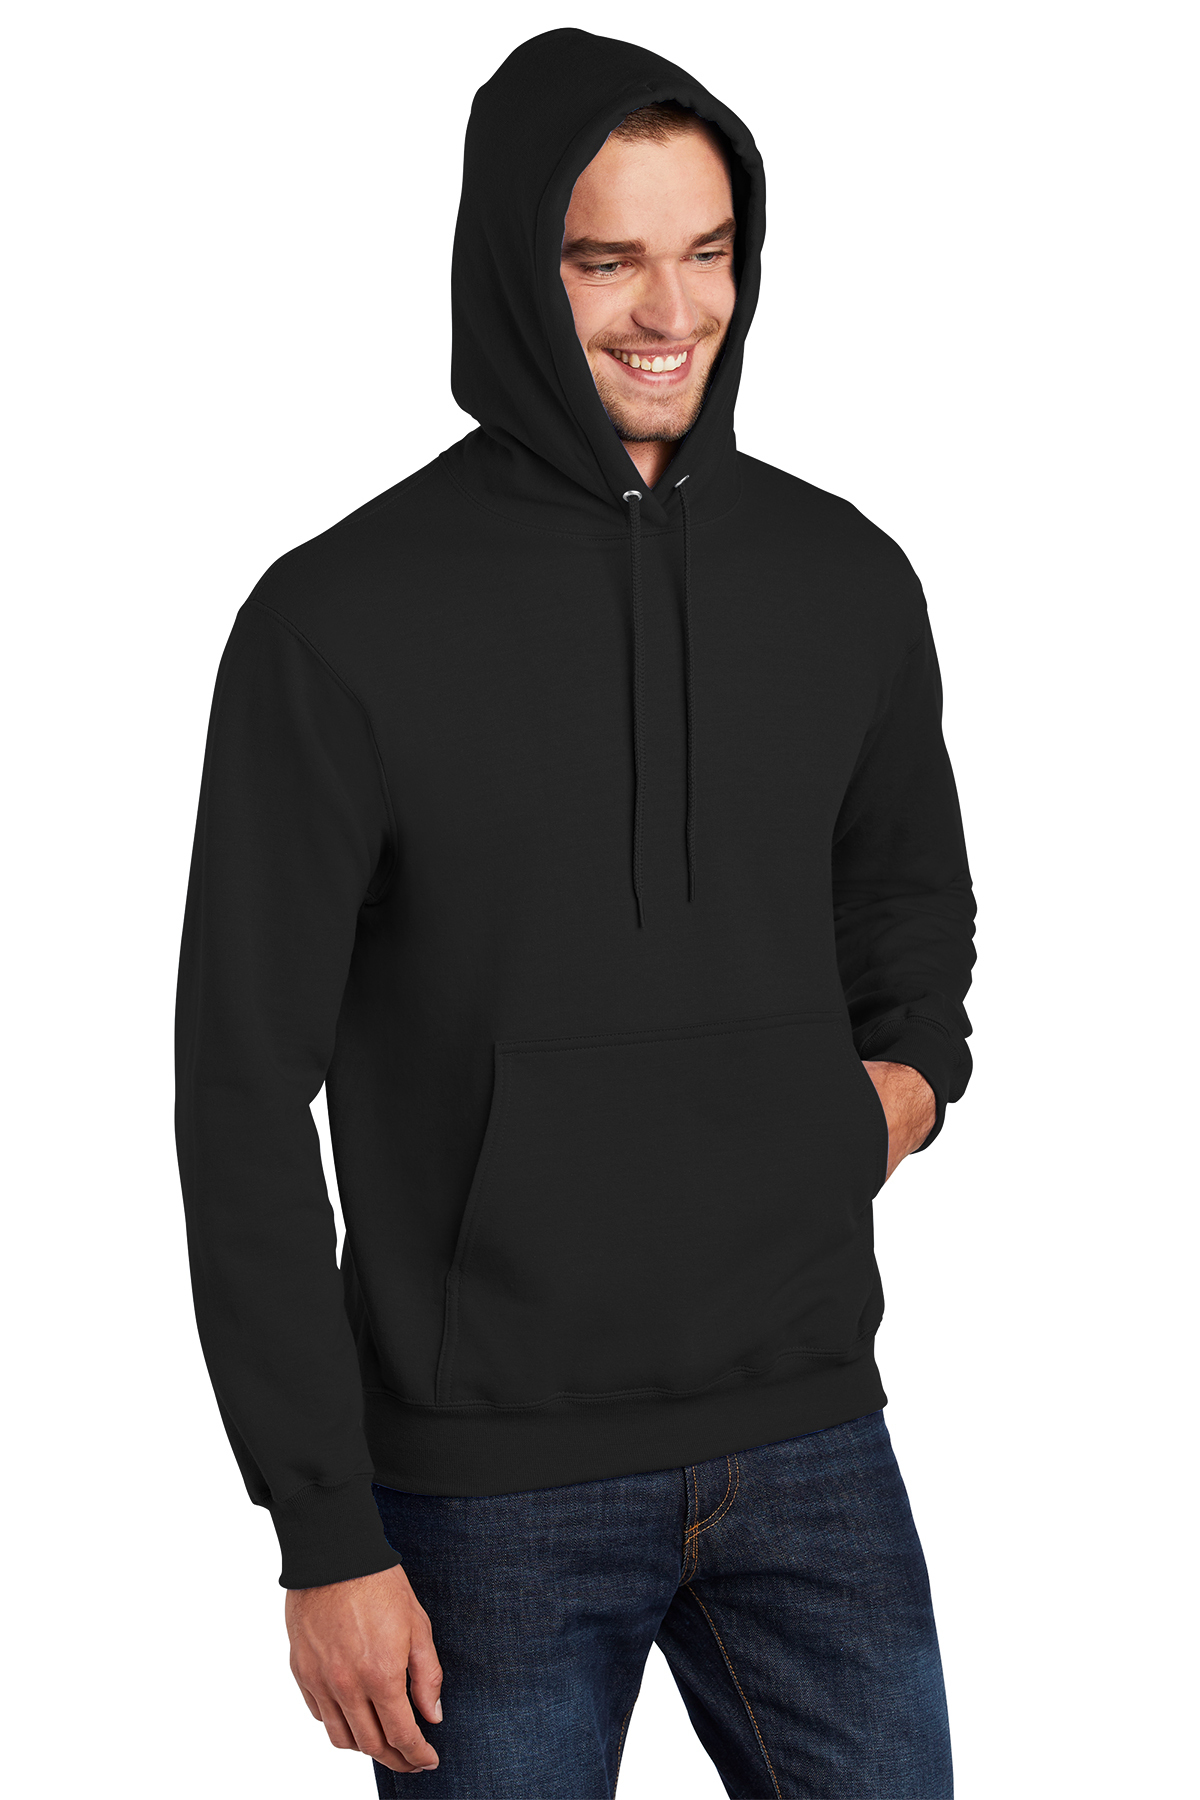 Port & | SanMar Essential Pullover Sweatshirt Company Fleece Hooded | Product